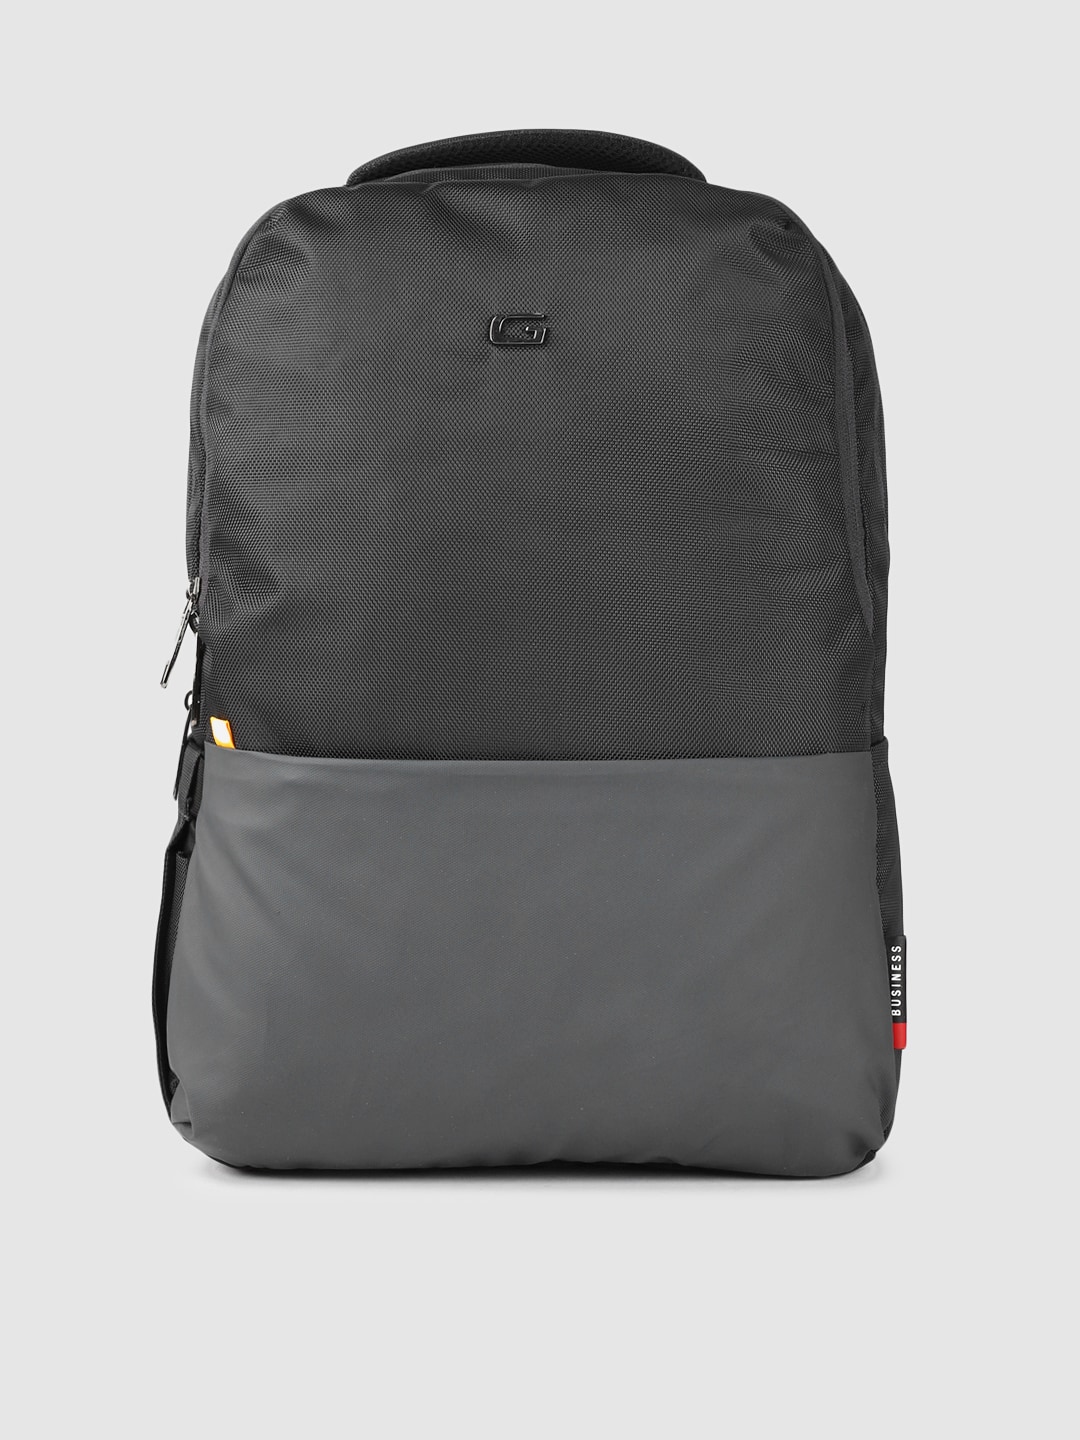 Gear Unisex Black & Grey Colourblocked SAUVE BUSINESS LAPTOP Backpack